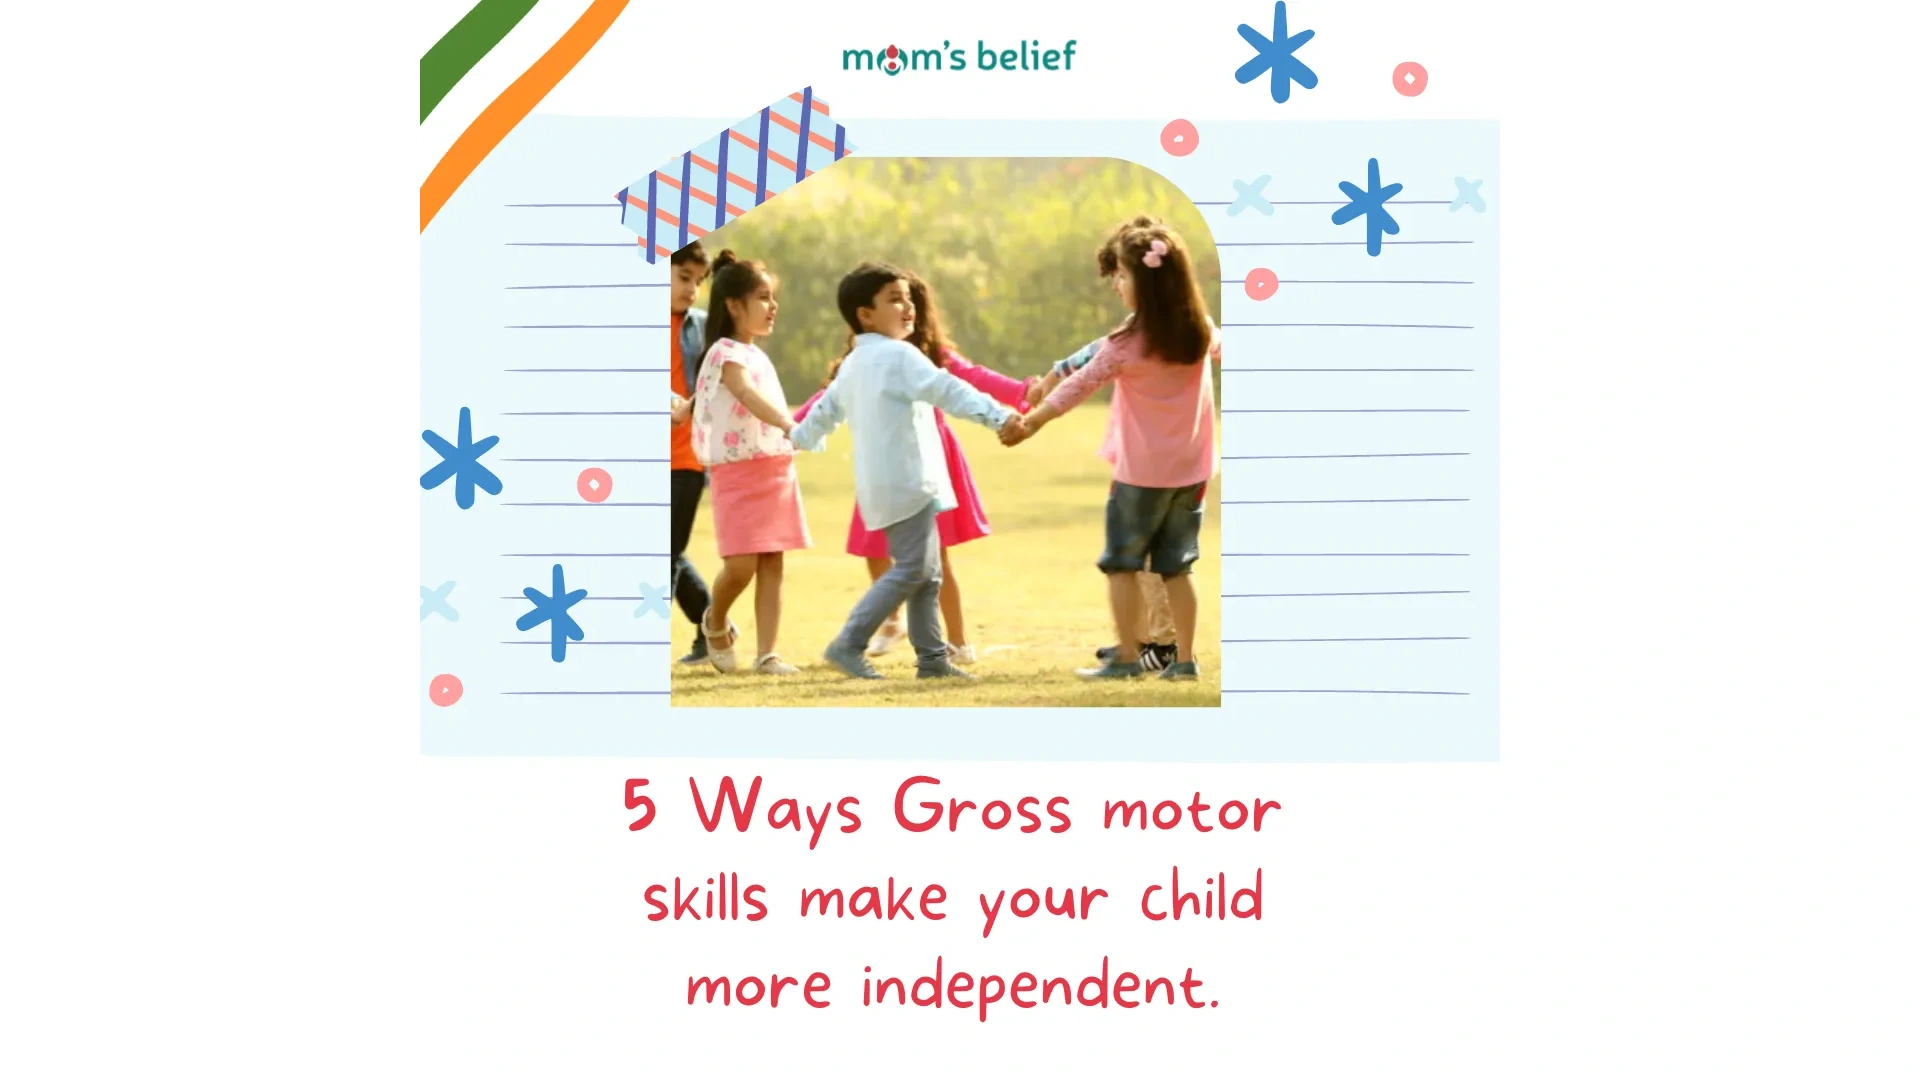 5 Ways Gross motor skills make your child more independent.